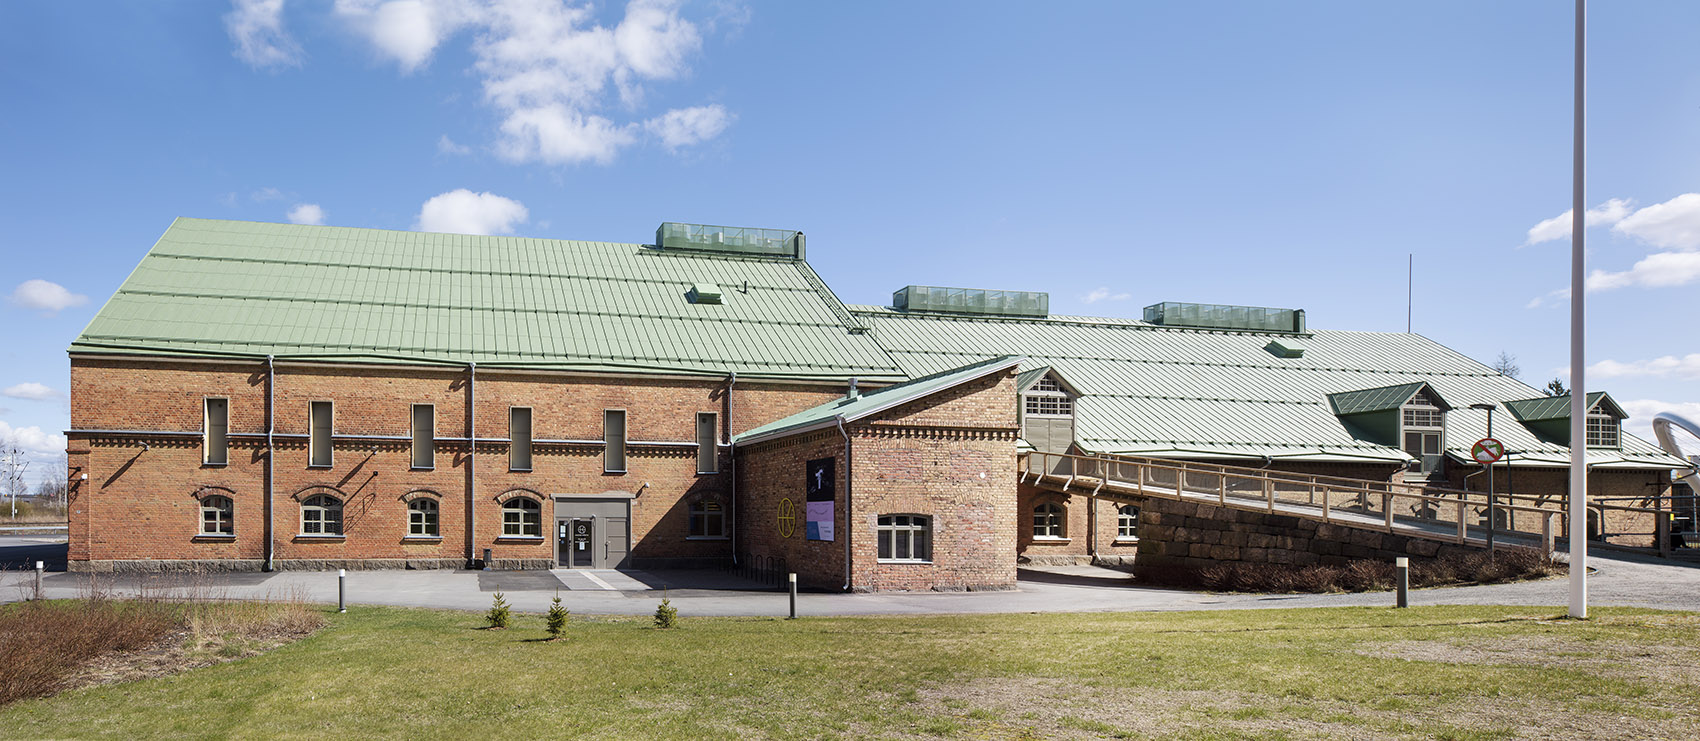 Kalevan Navetta文化艺术中心，芬兰/材料与结构的交响曲-57